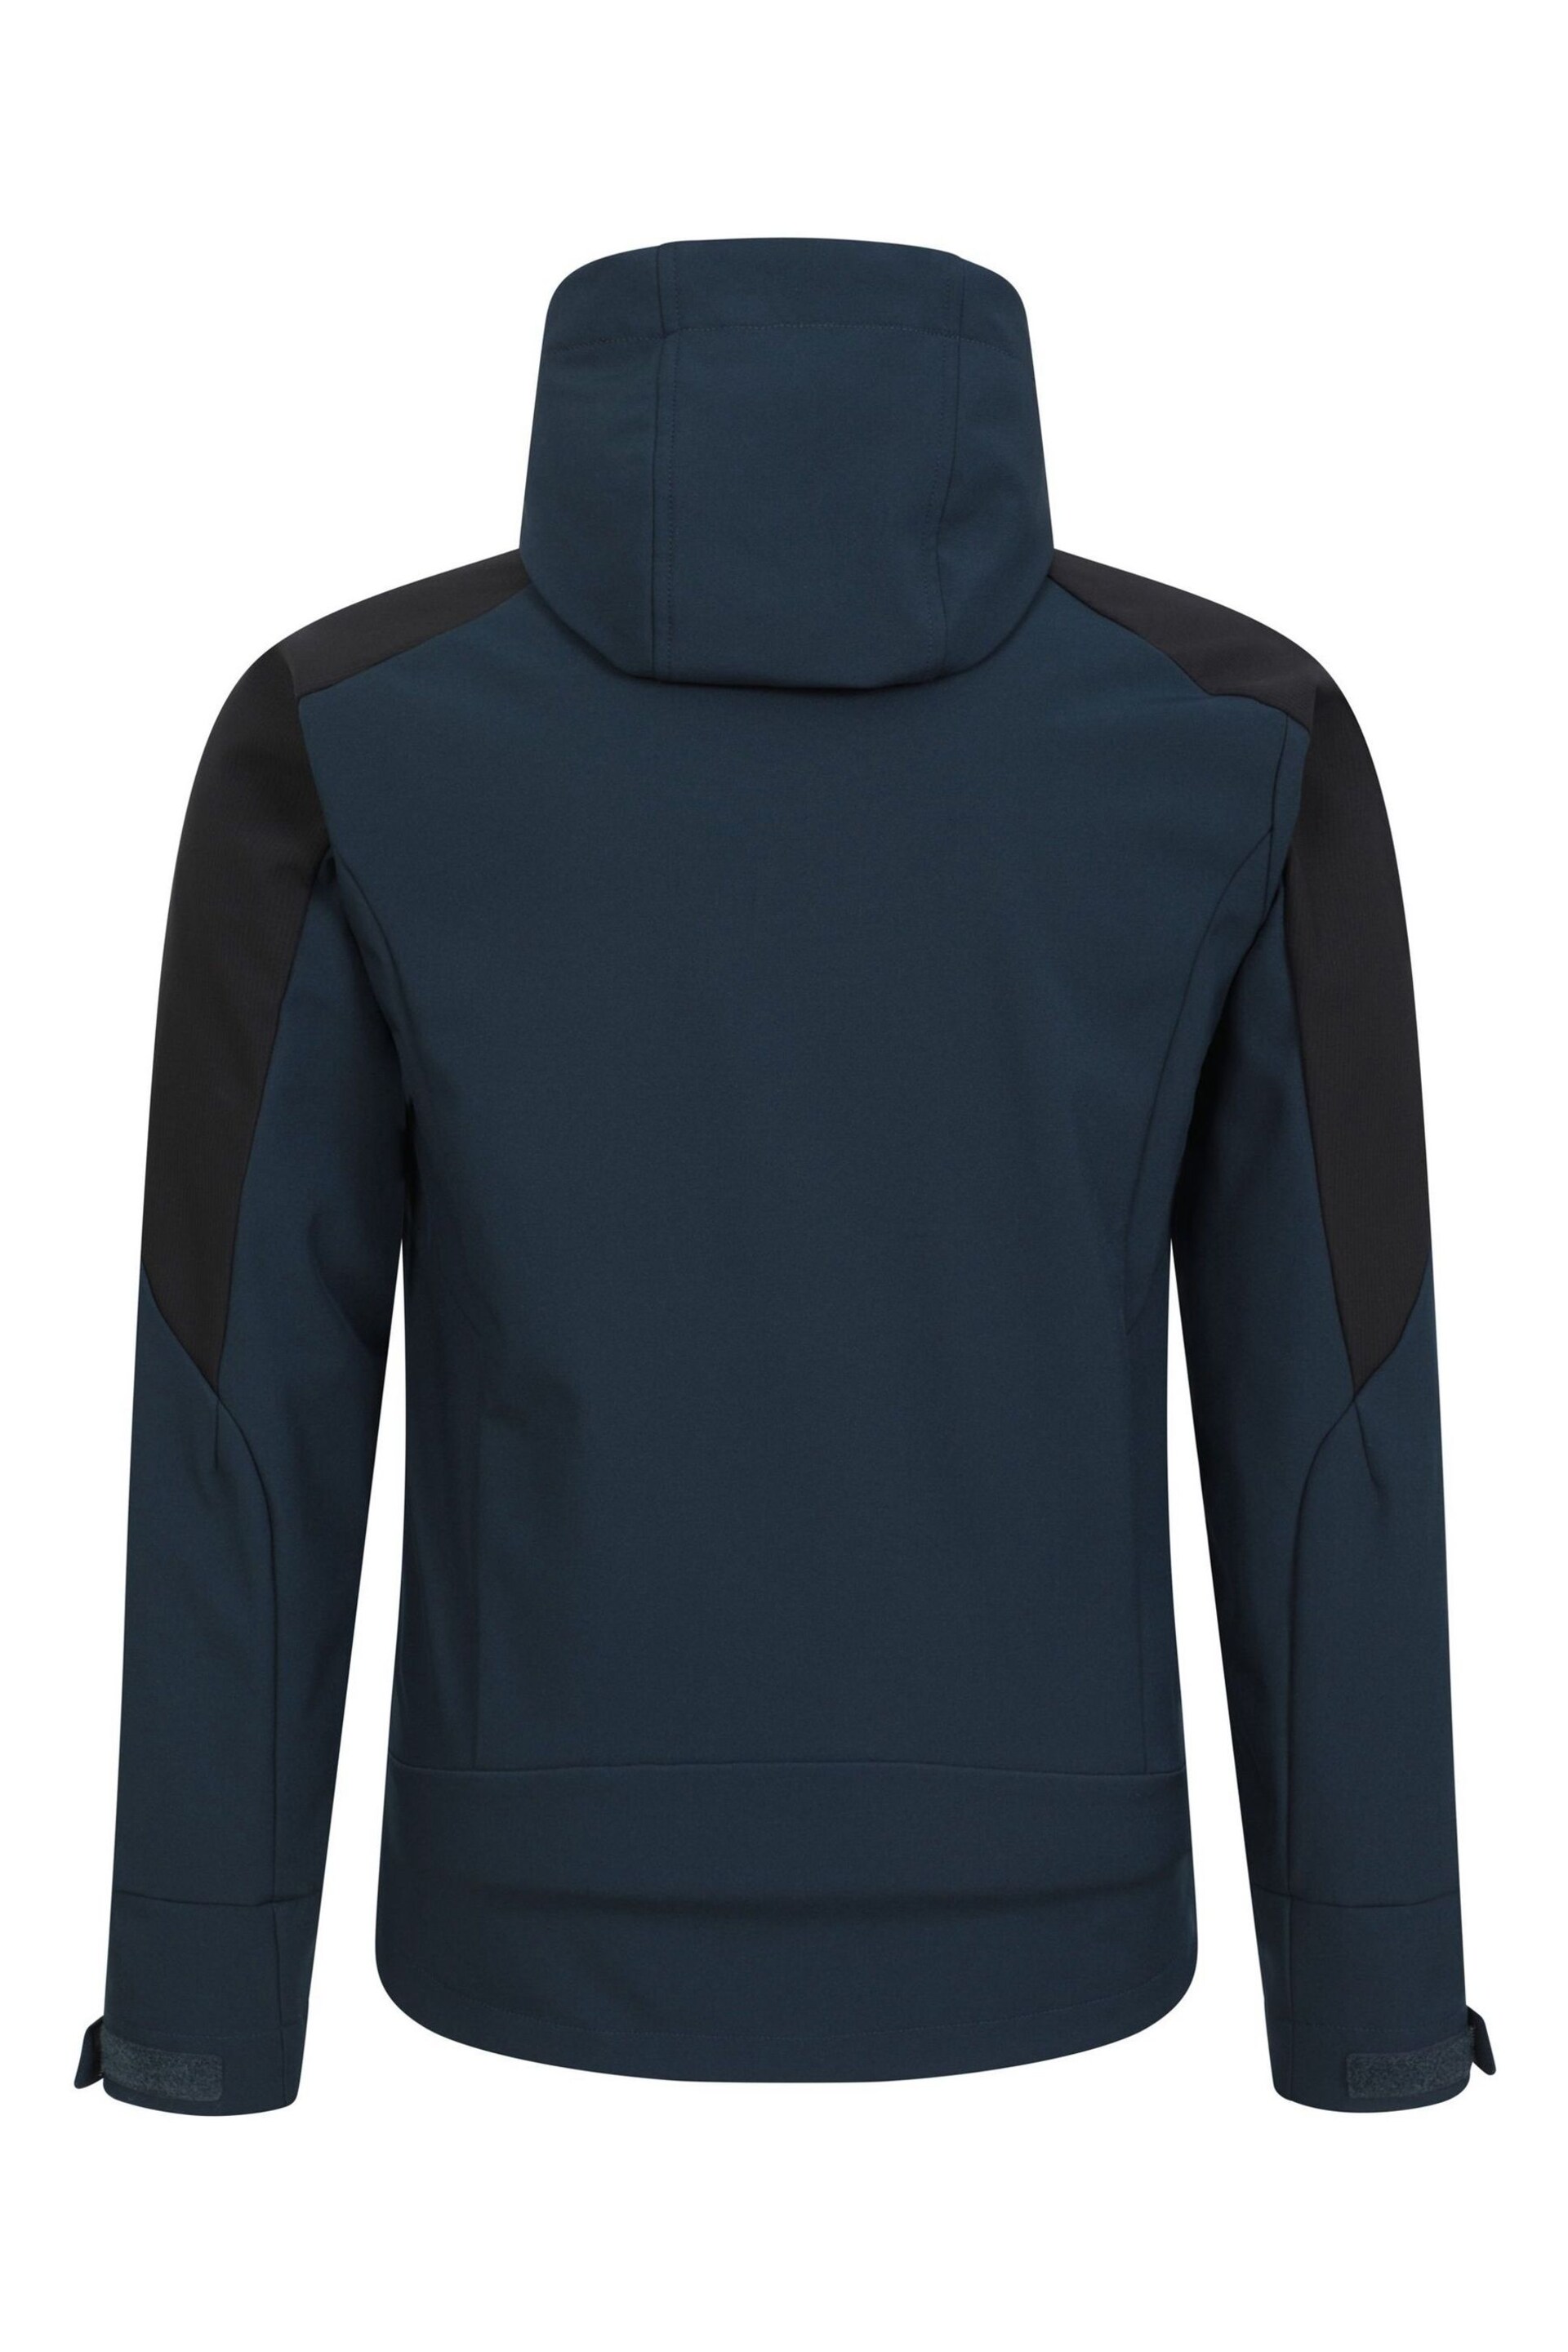 Mountain Warehouse Blue Mens Radius Water Resistant Softshell Jacket - Image 4 of 5